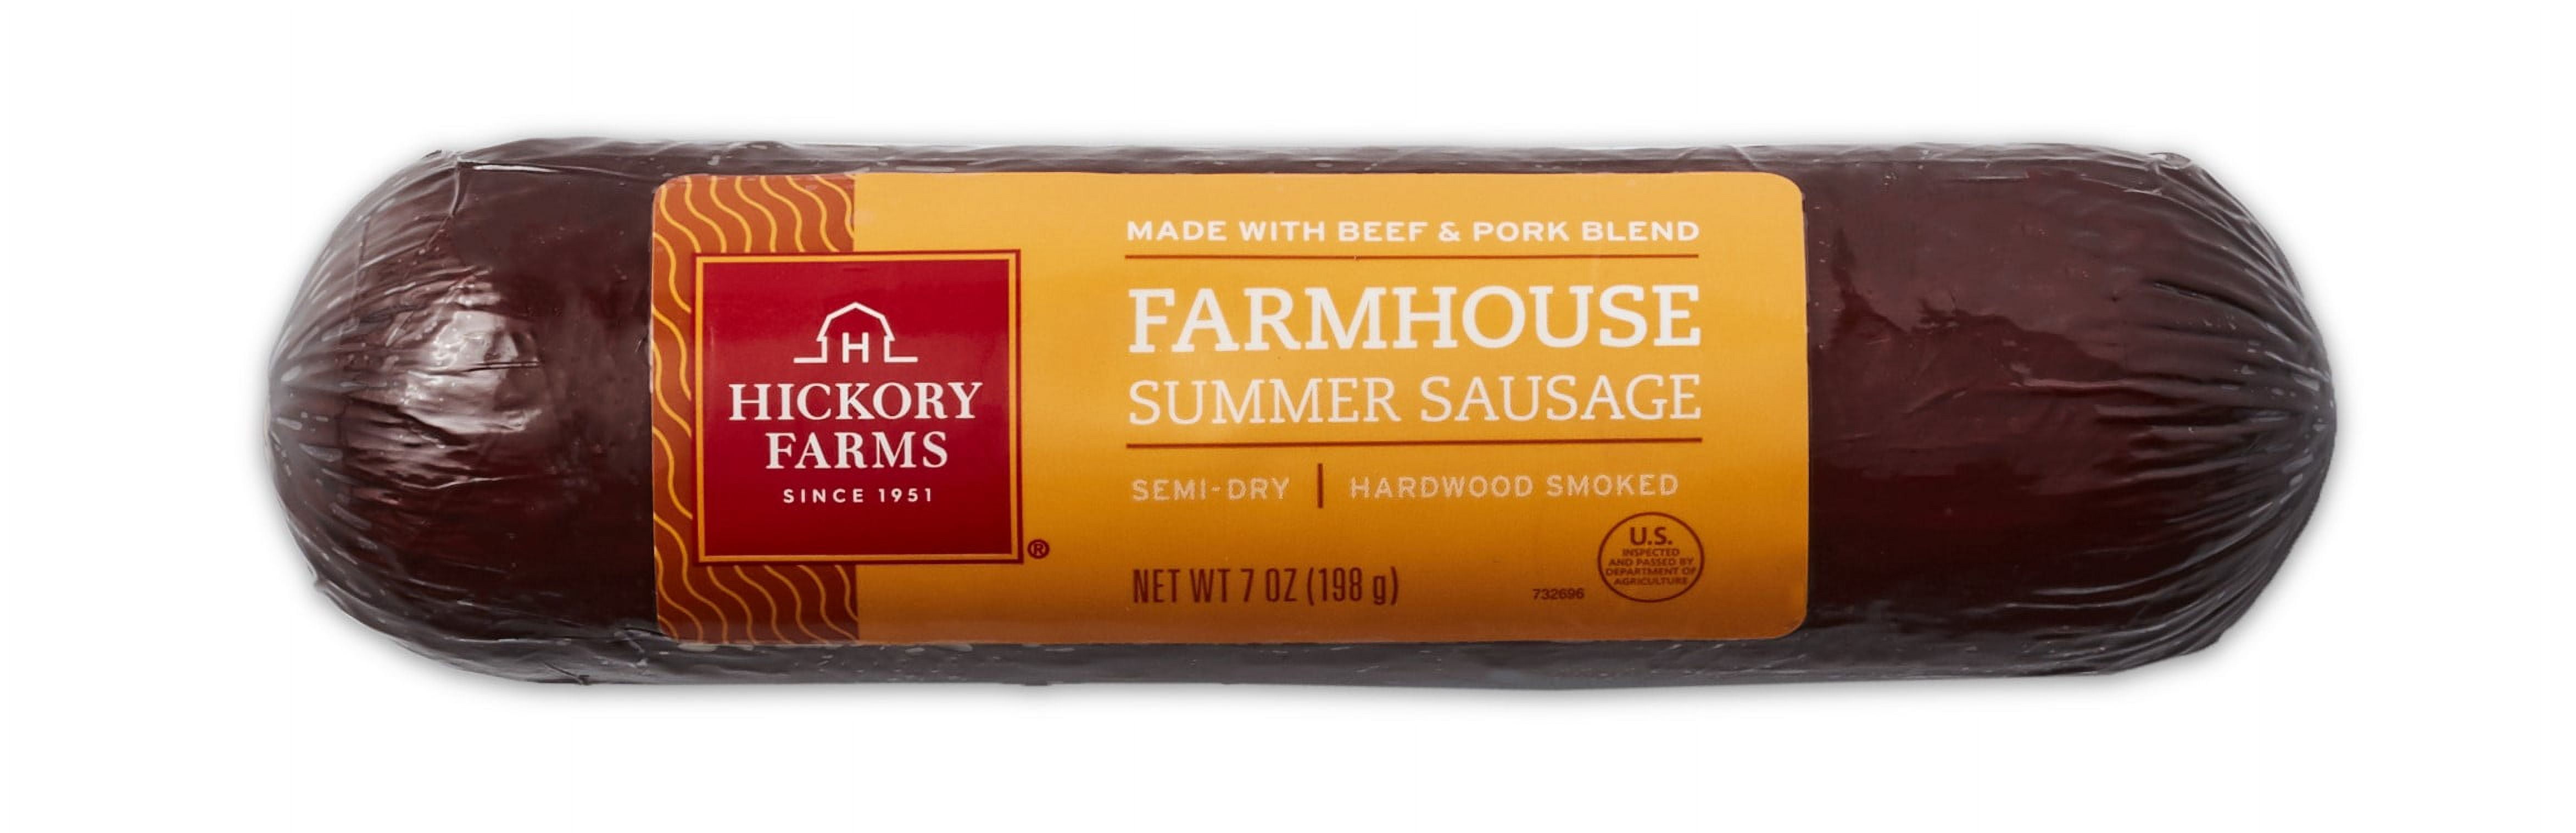 Hickory Farms Summer Sausage Semi-Dry Hardwood Smoked Farmhouse